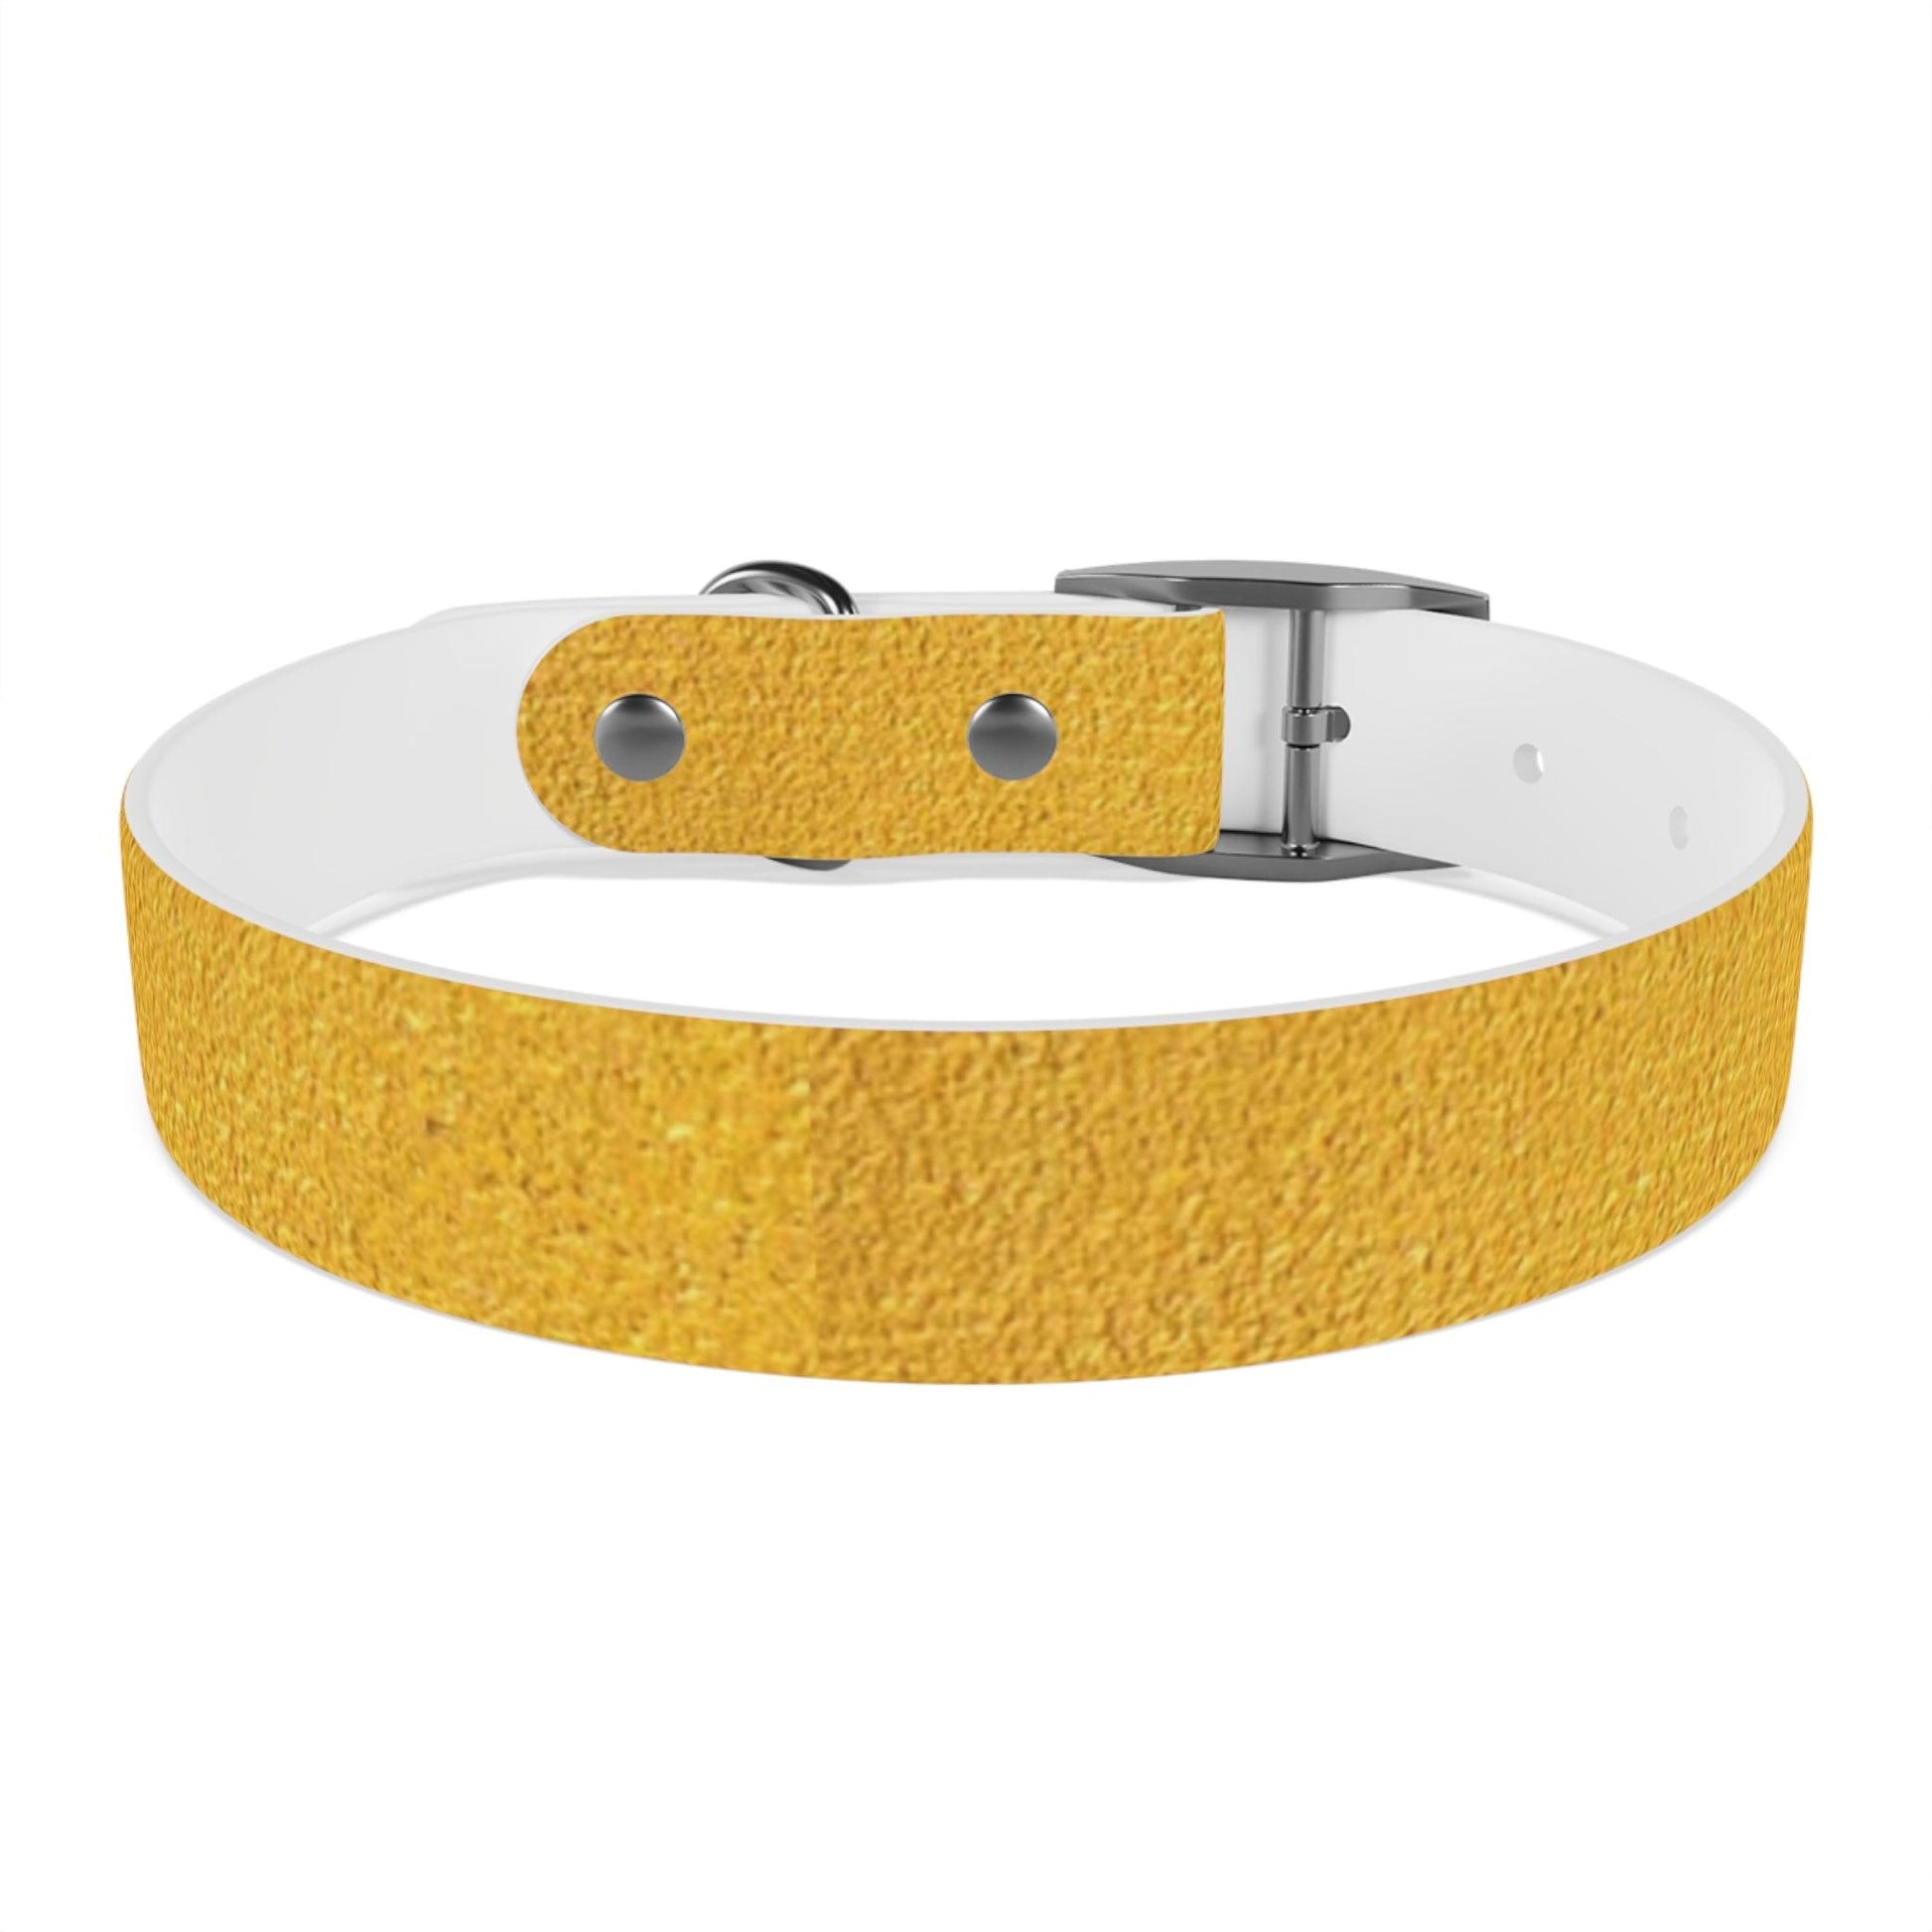 Faux Gold Dog Collar 4 Sizes S-XL - Lizard Vigilante